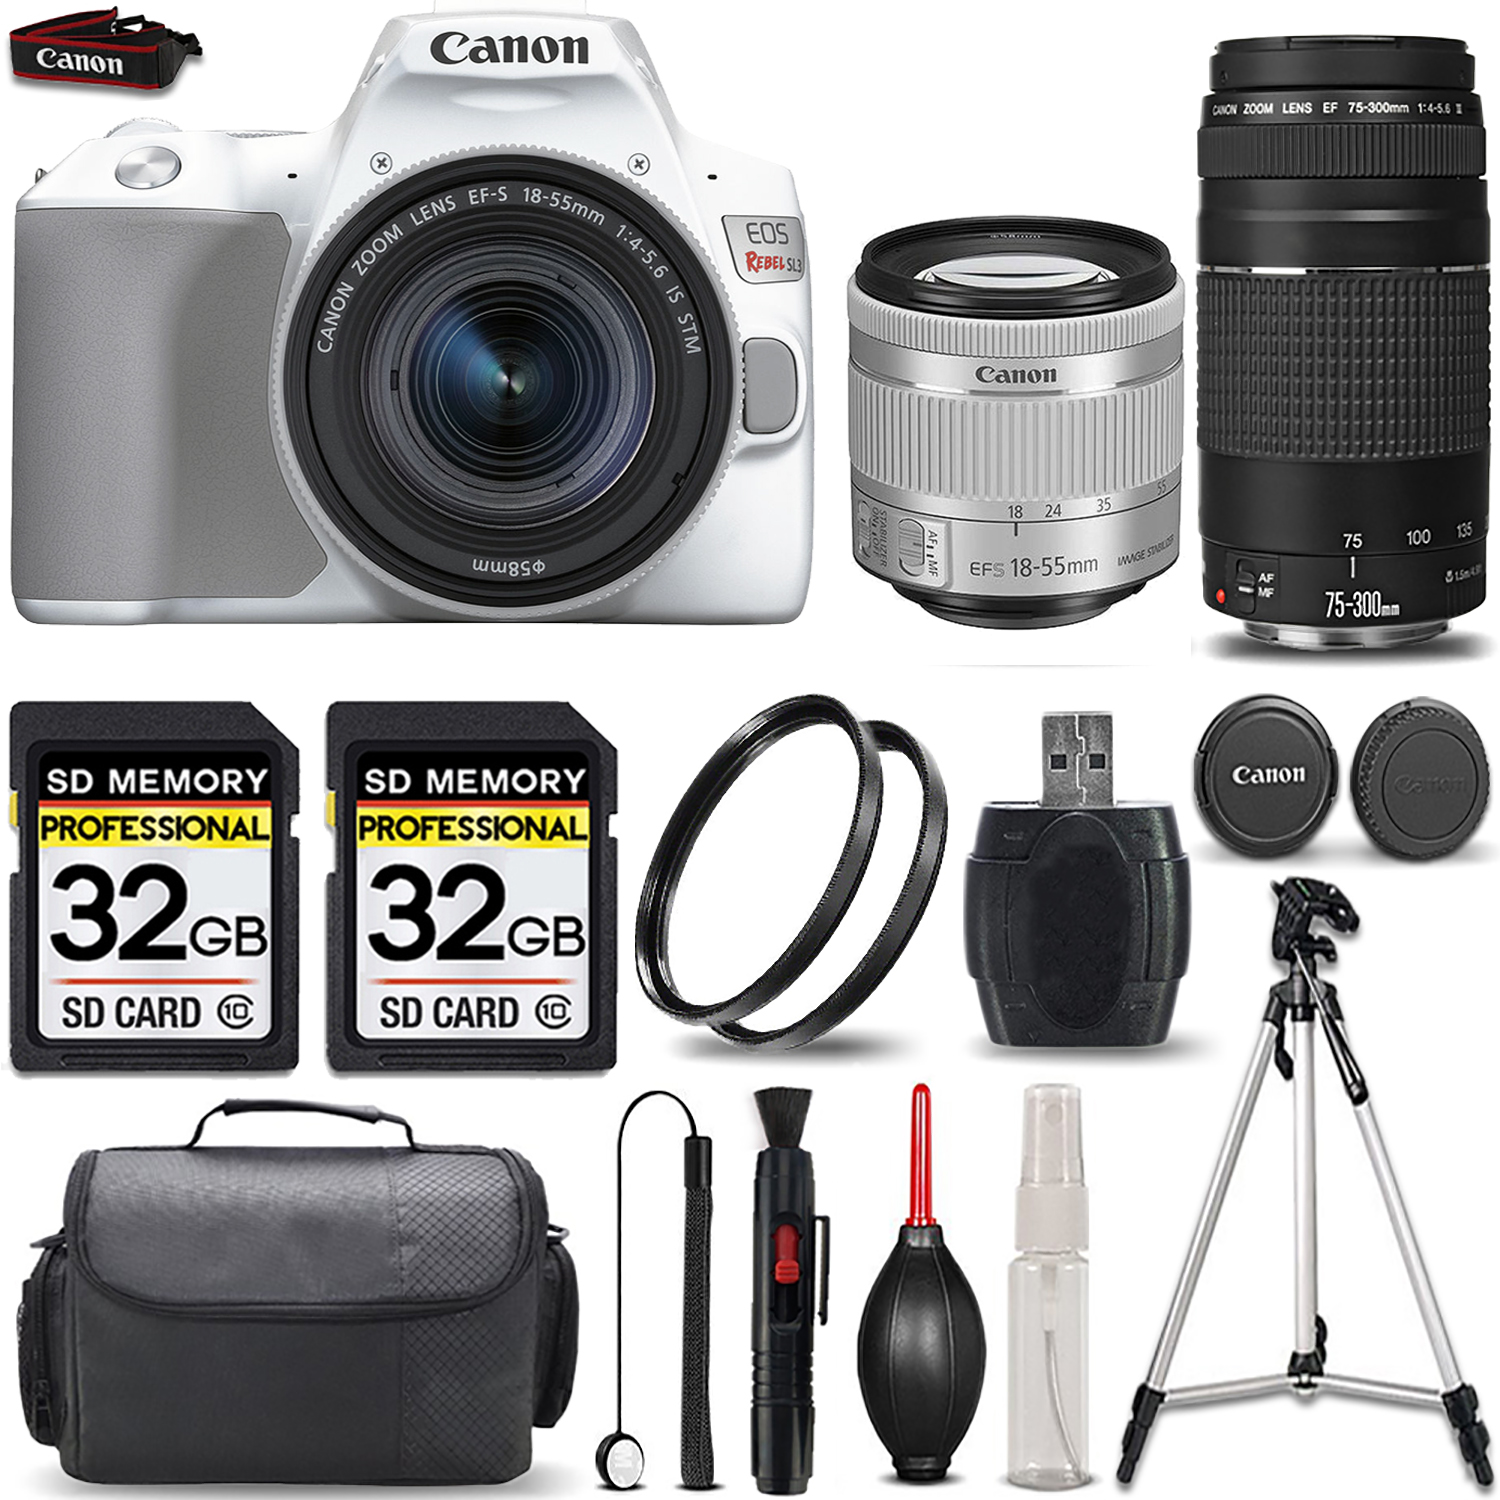 EOS Rebel SL3 Camera(White) + 18-55mm STM Lens + Canon EF 75- 300mm III Lens *FREE SHIPPING*